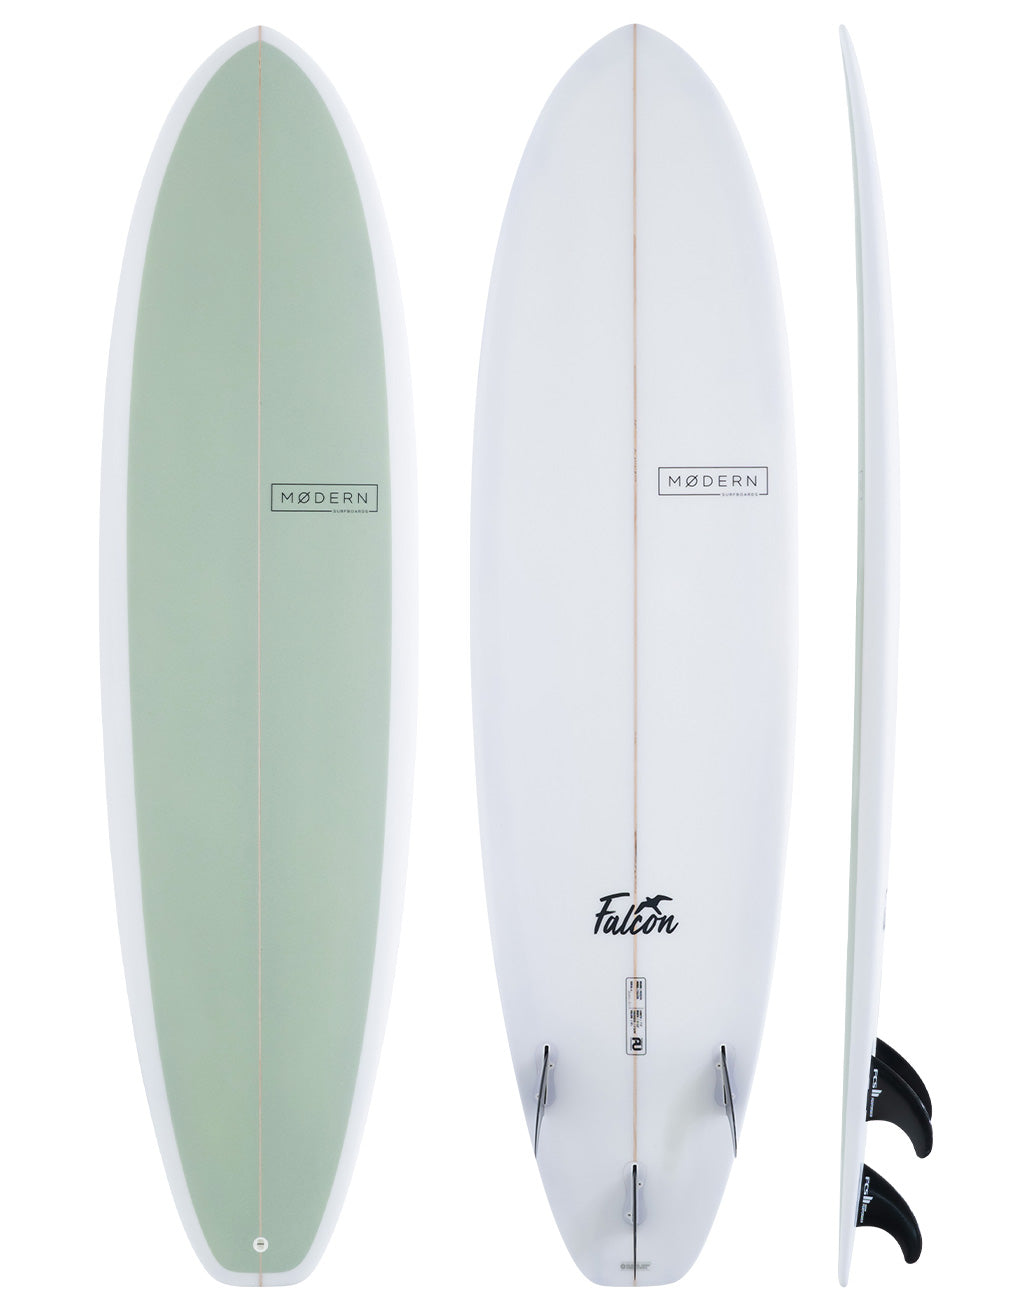 Modern Surfboards Falcon - olive mid length surfboard